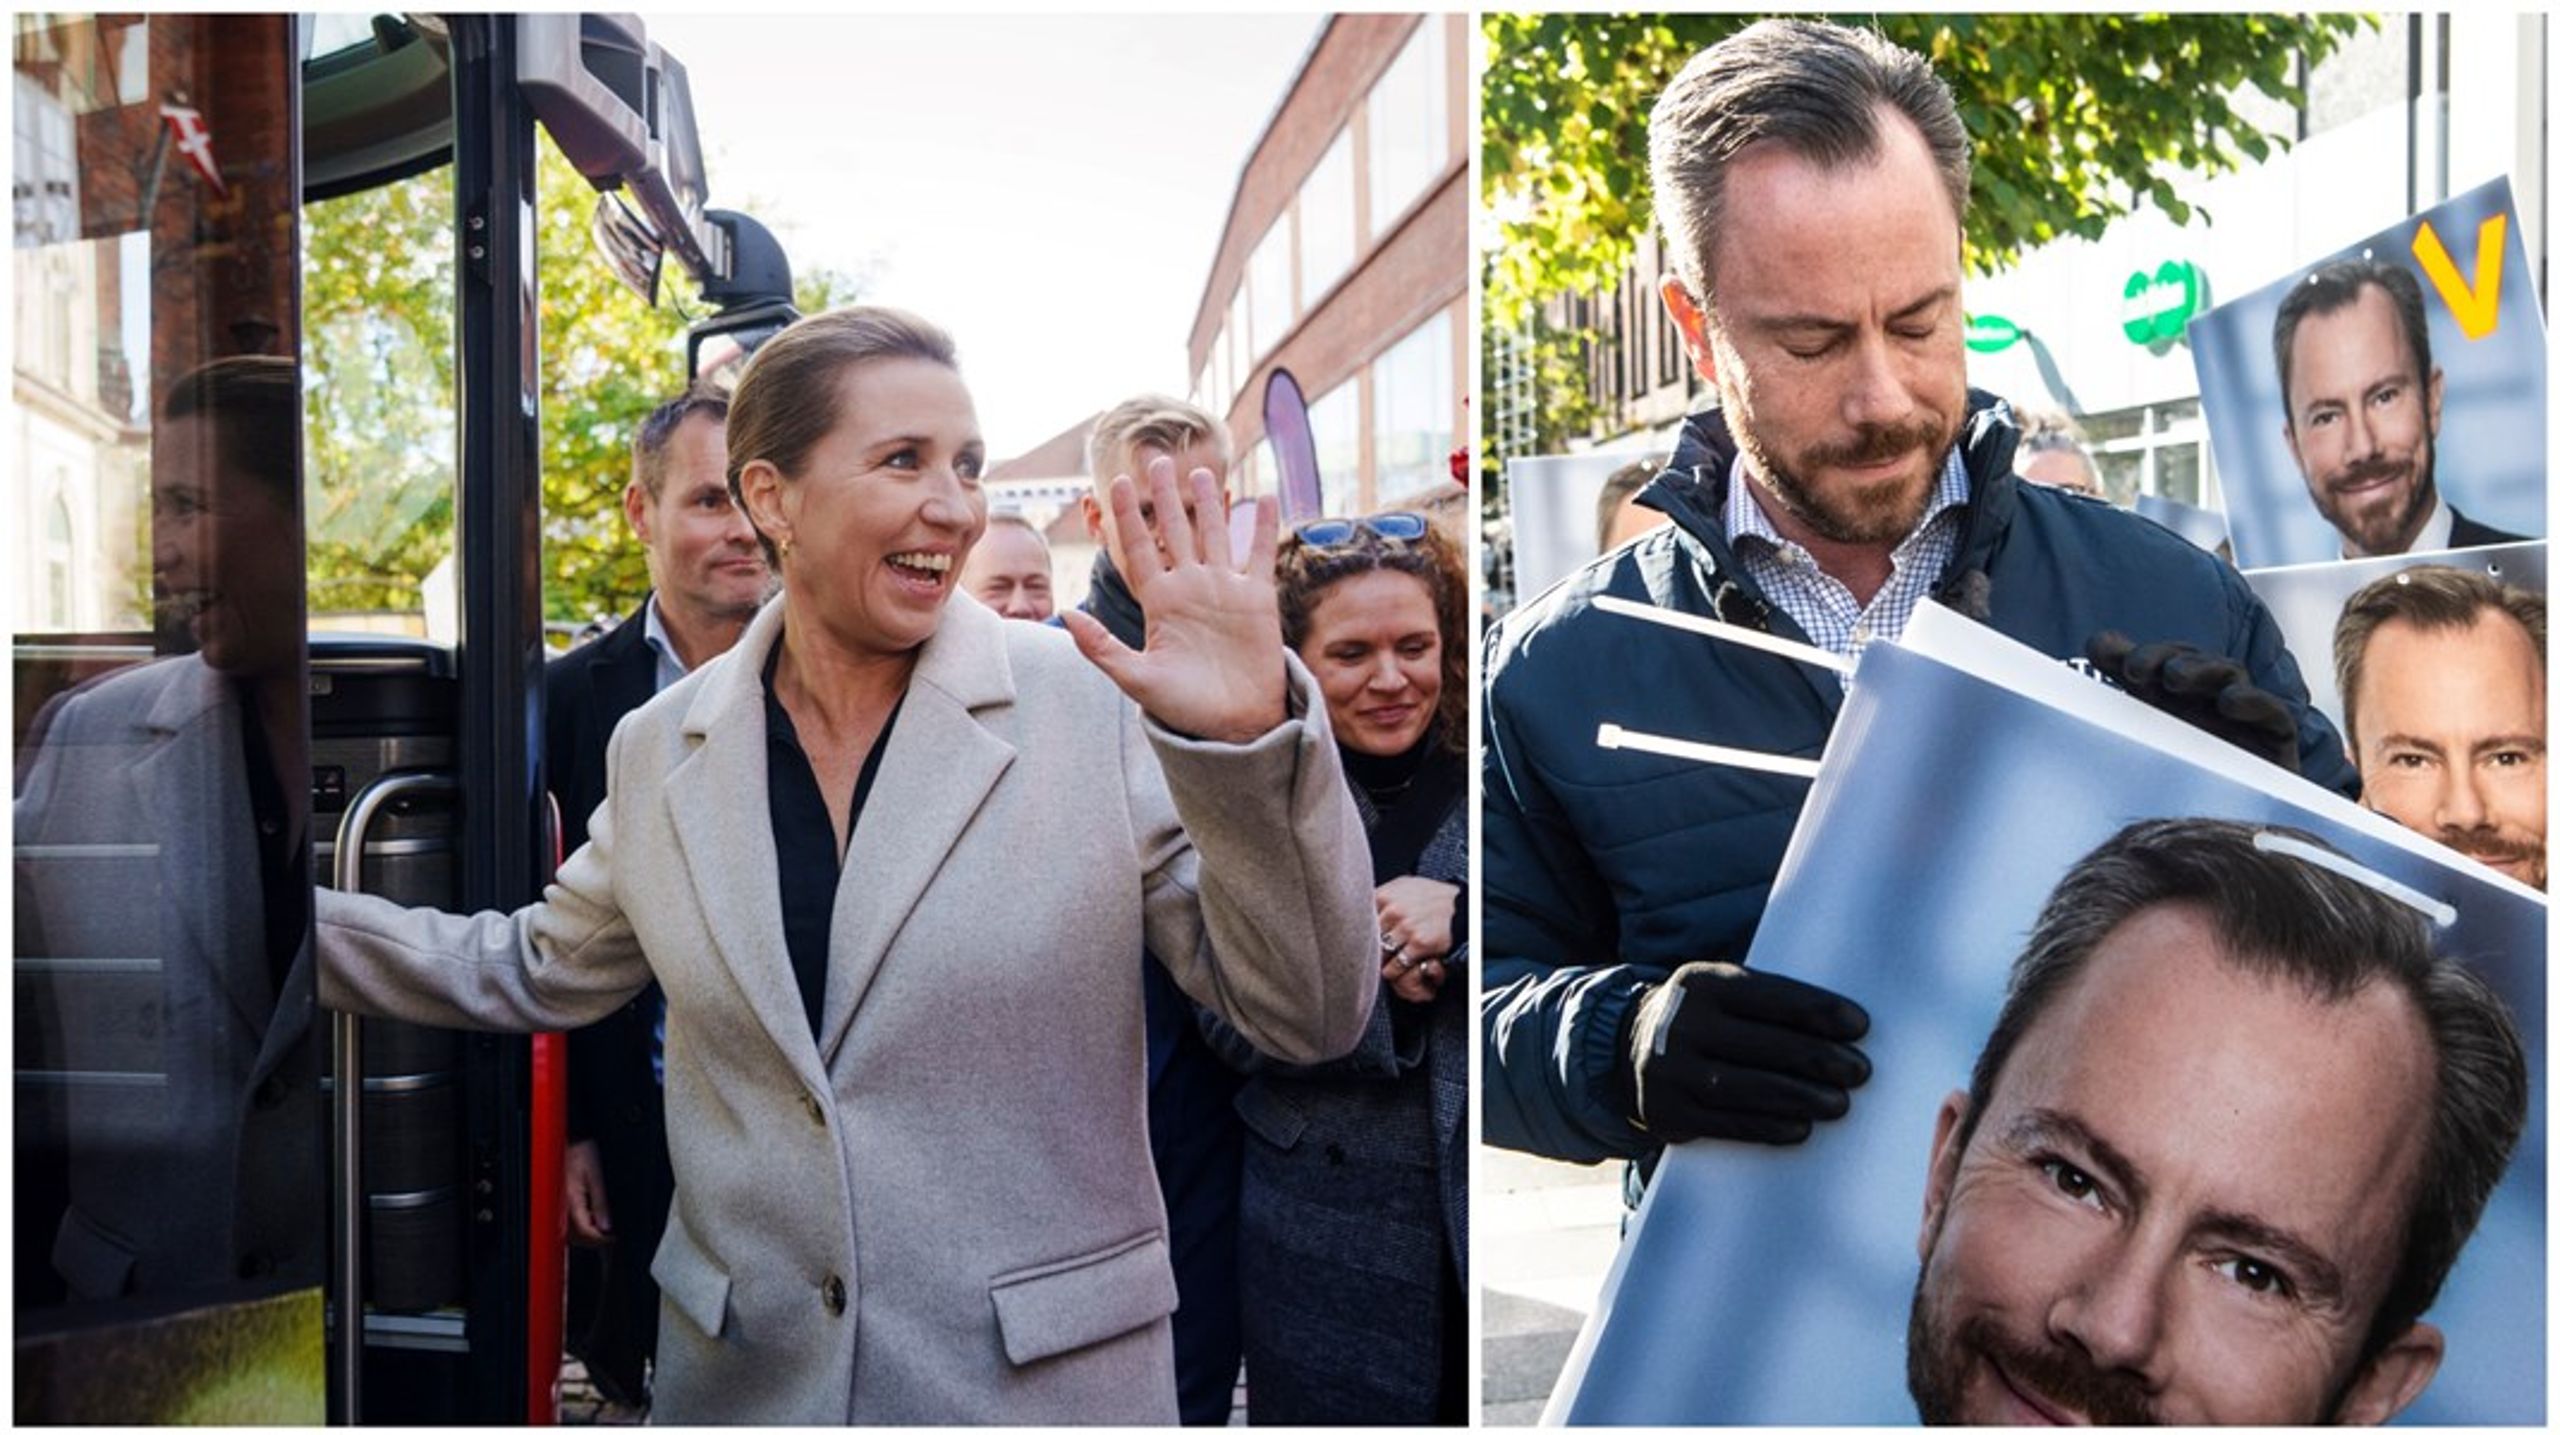 Danmarks statsminister Mette Frederiksen (S) hoppas bli omvald den 1 november. En av hennes motkandidater är Jakob Ellemann-Jensen, partiledare för Venstre.